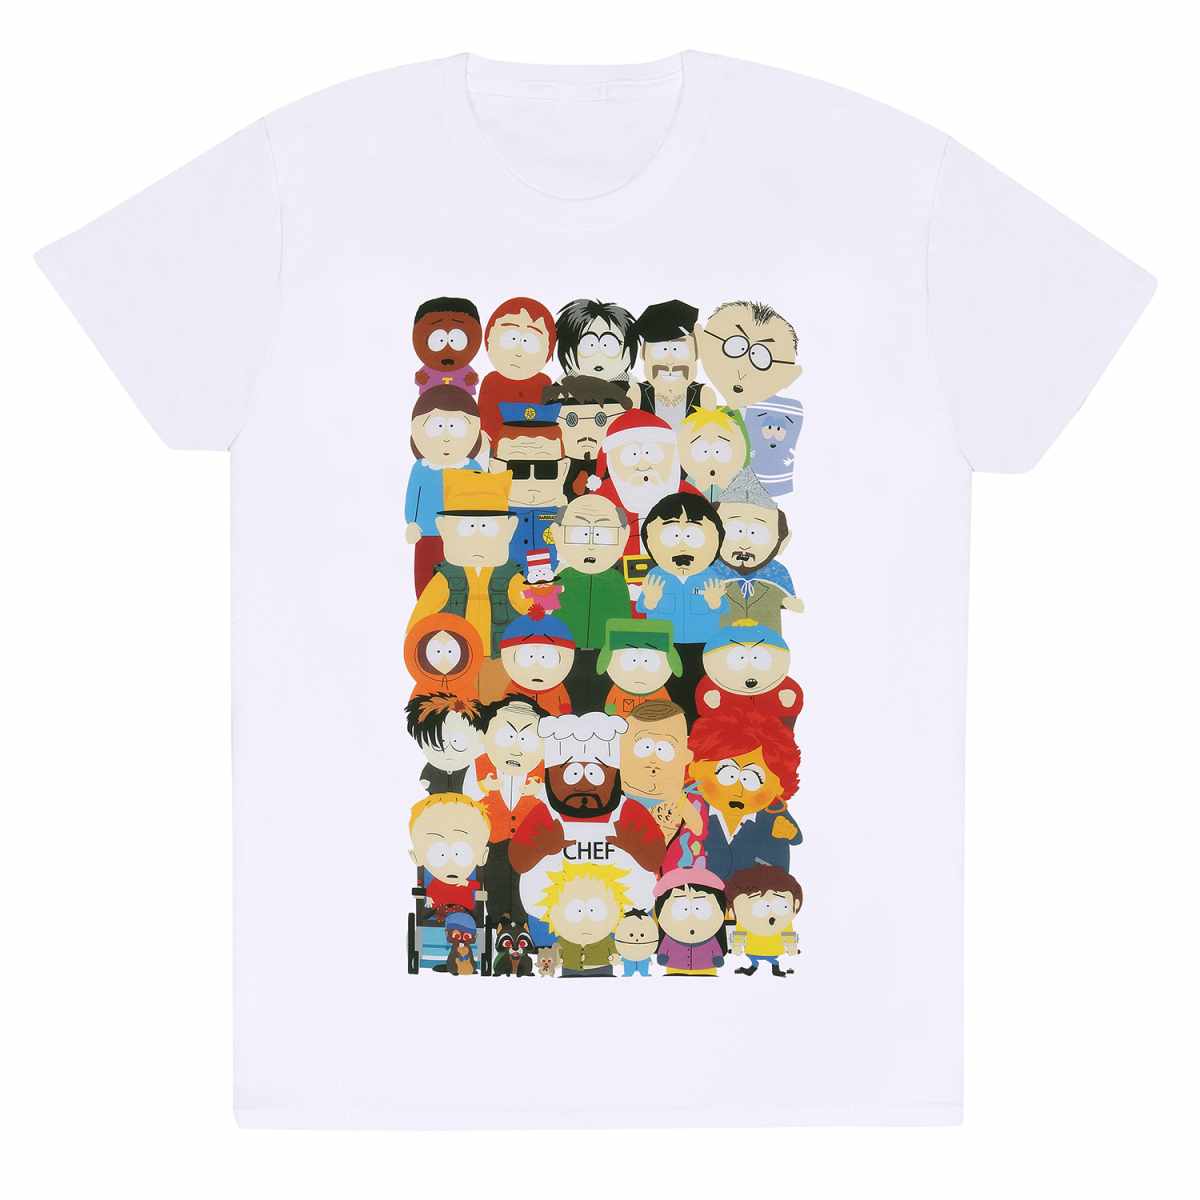 South Park – Town Group - t-shirt